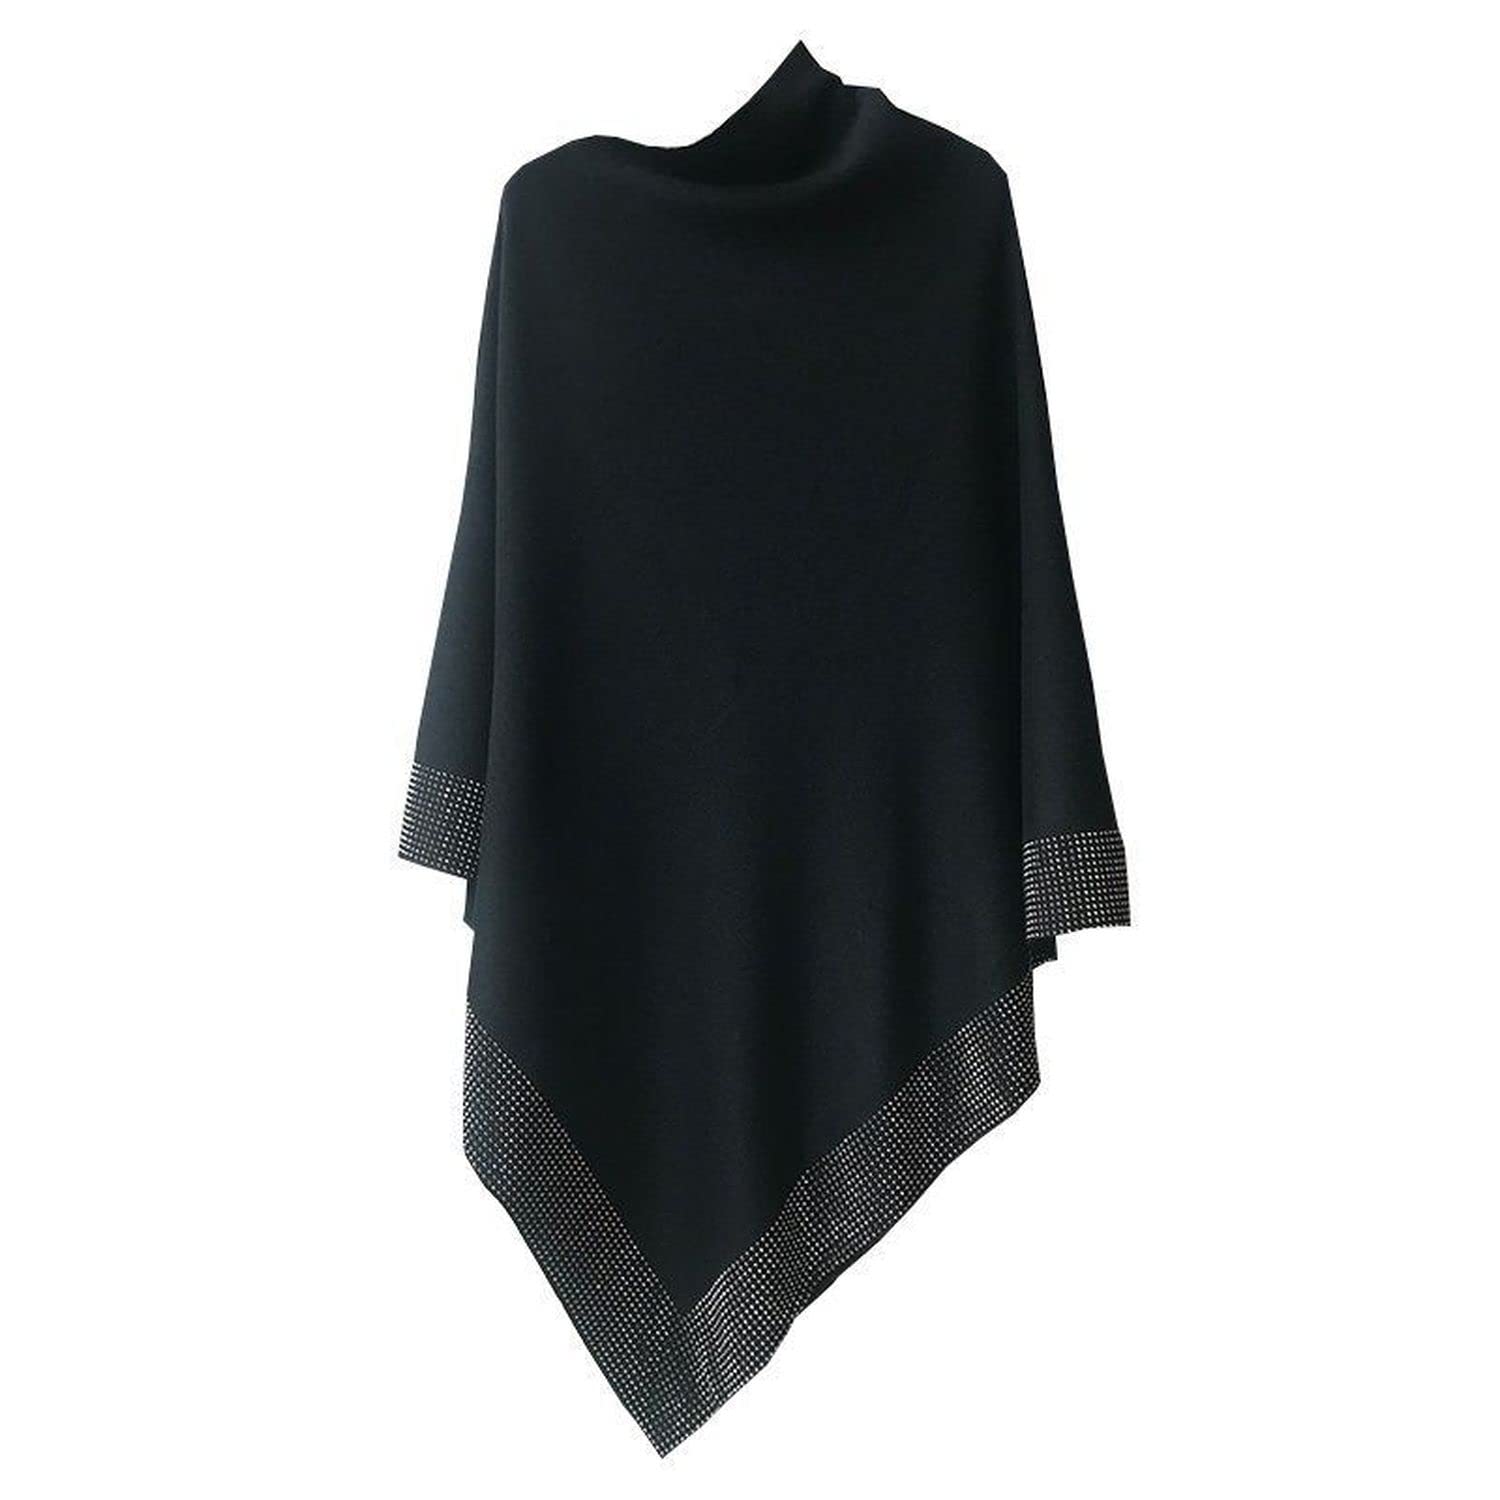 Dzhzuj Shiny Women's Wool Rhinestone Shawls Shawls for Women Lightweight Shawls and Wraps for Evening Dresses,Ladies Irregular Loose Knitted Scarf Poncho Sweater (XX-Large,Black)